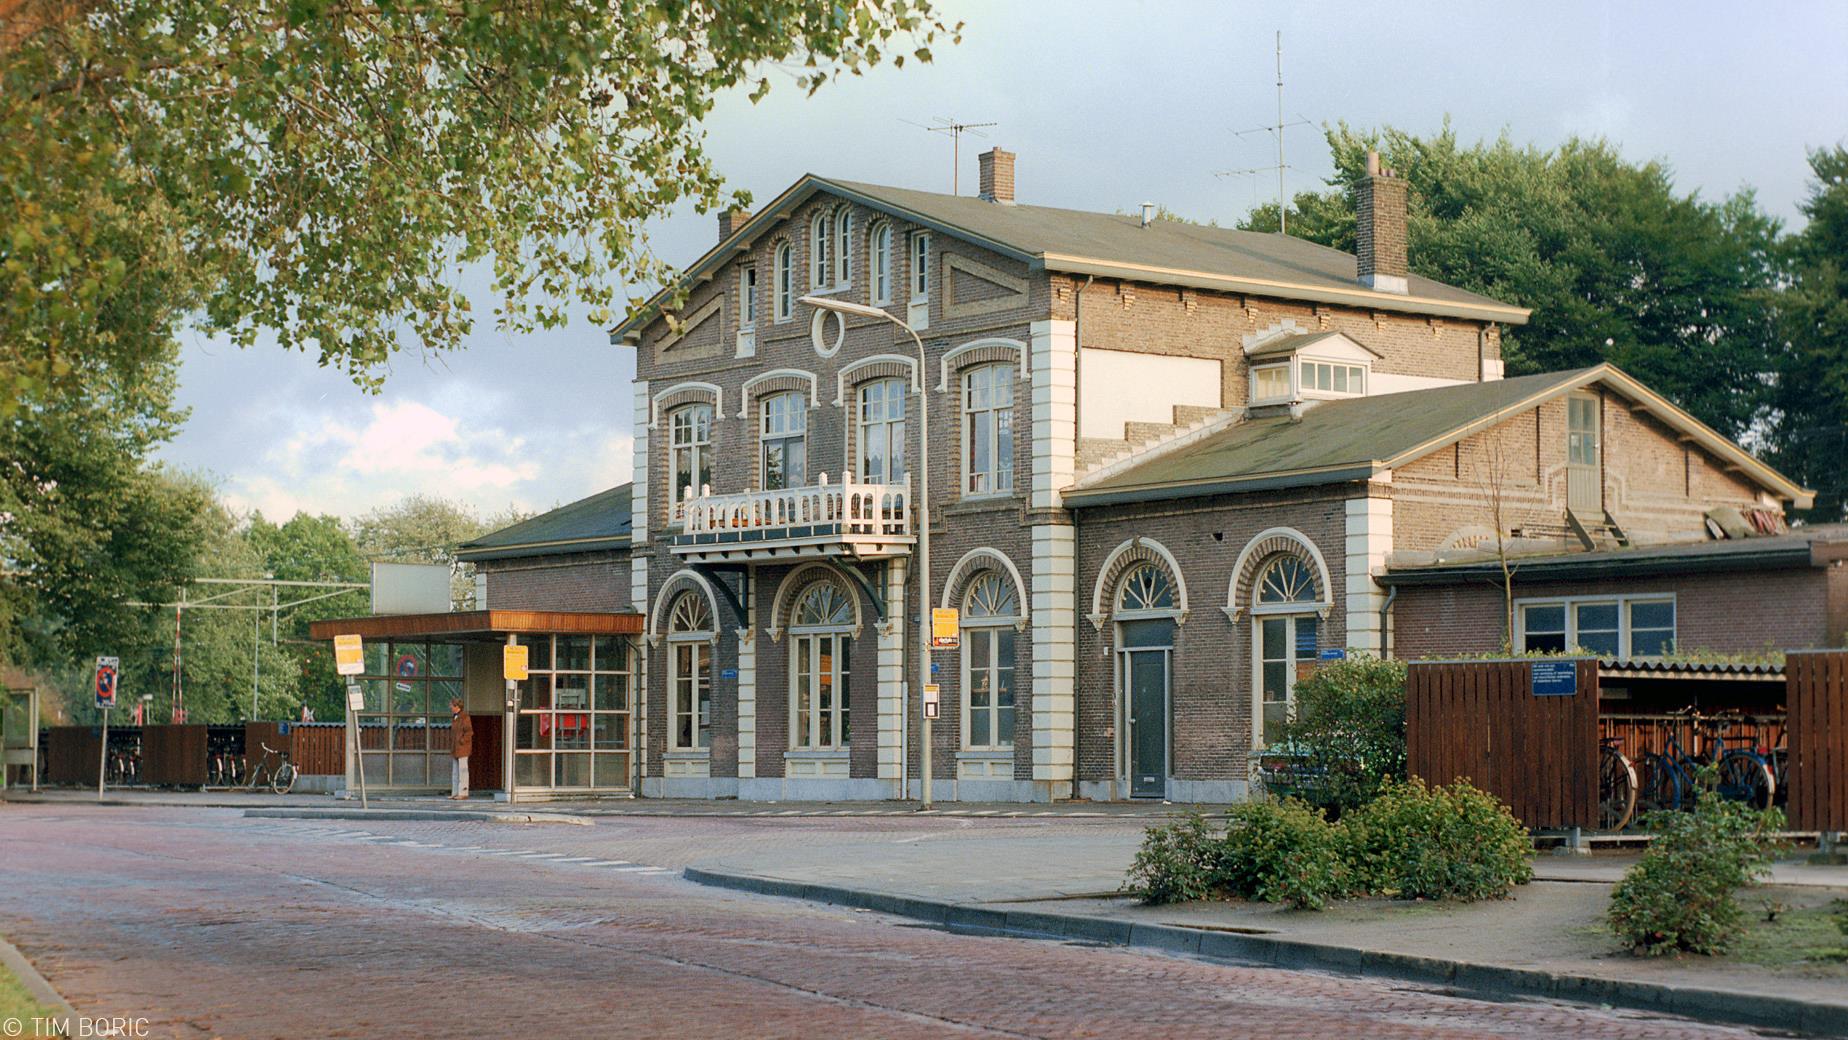 Station Harderwijk uit 1982